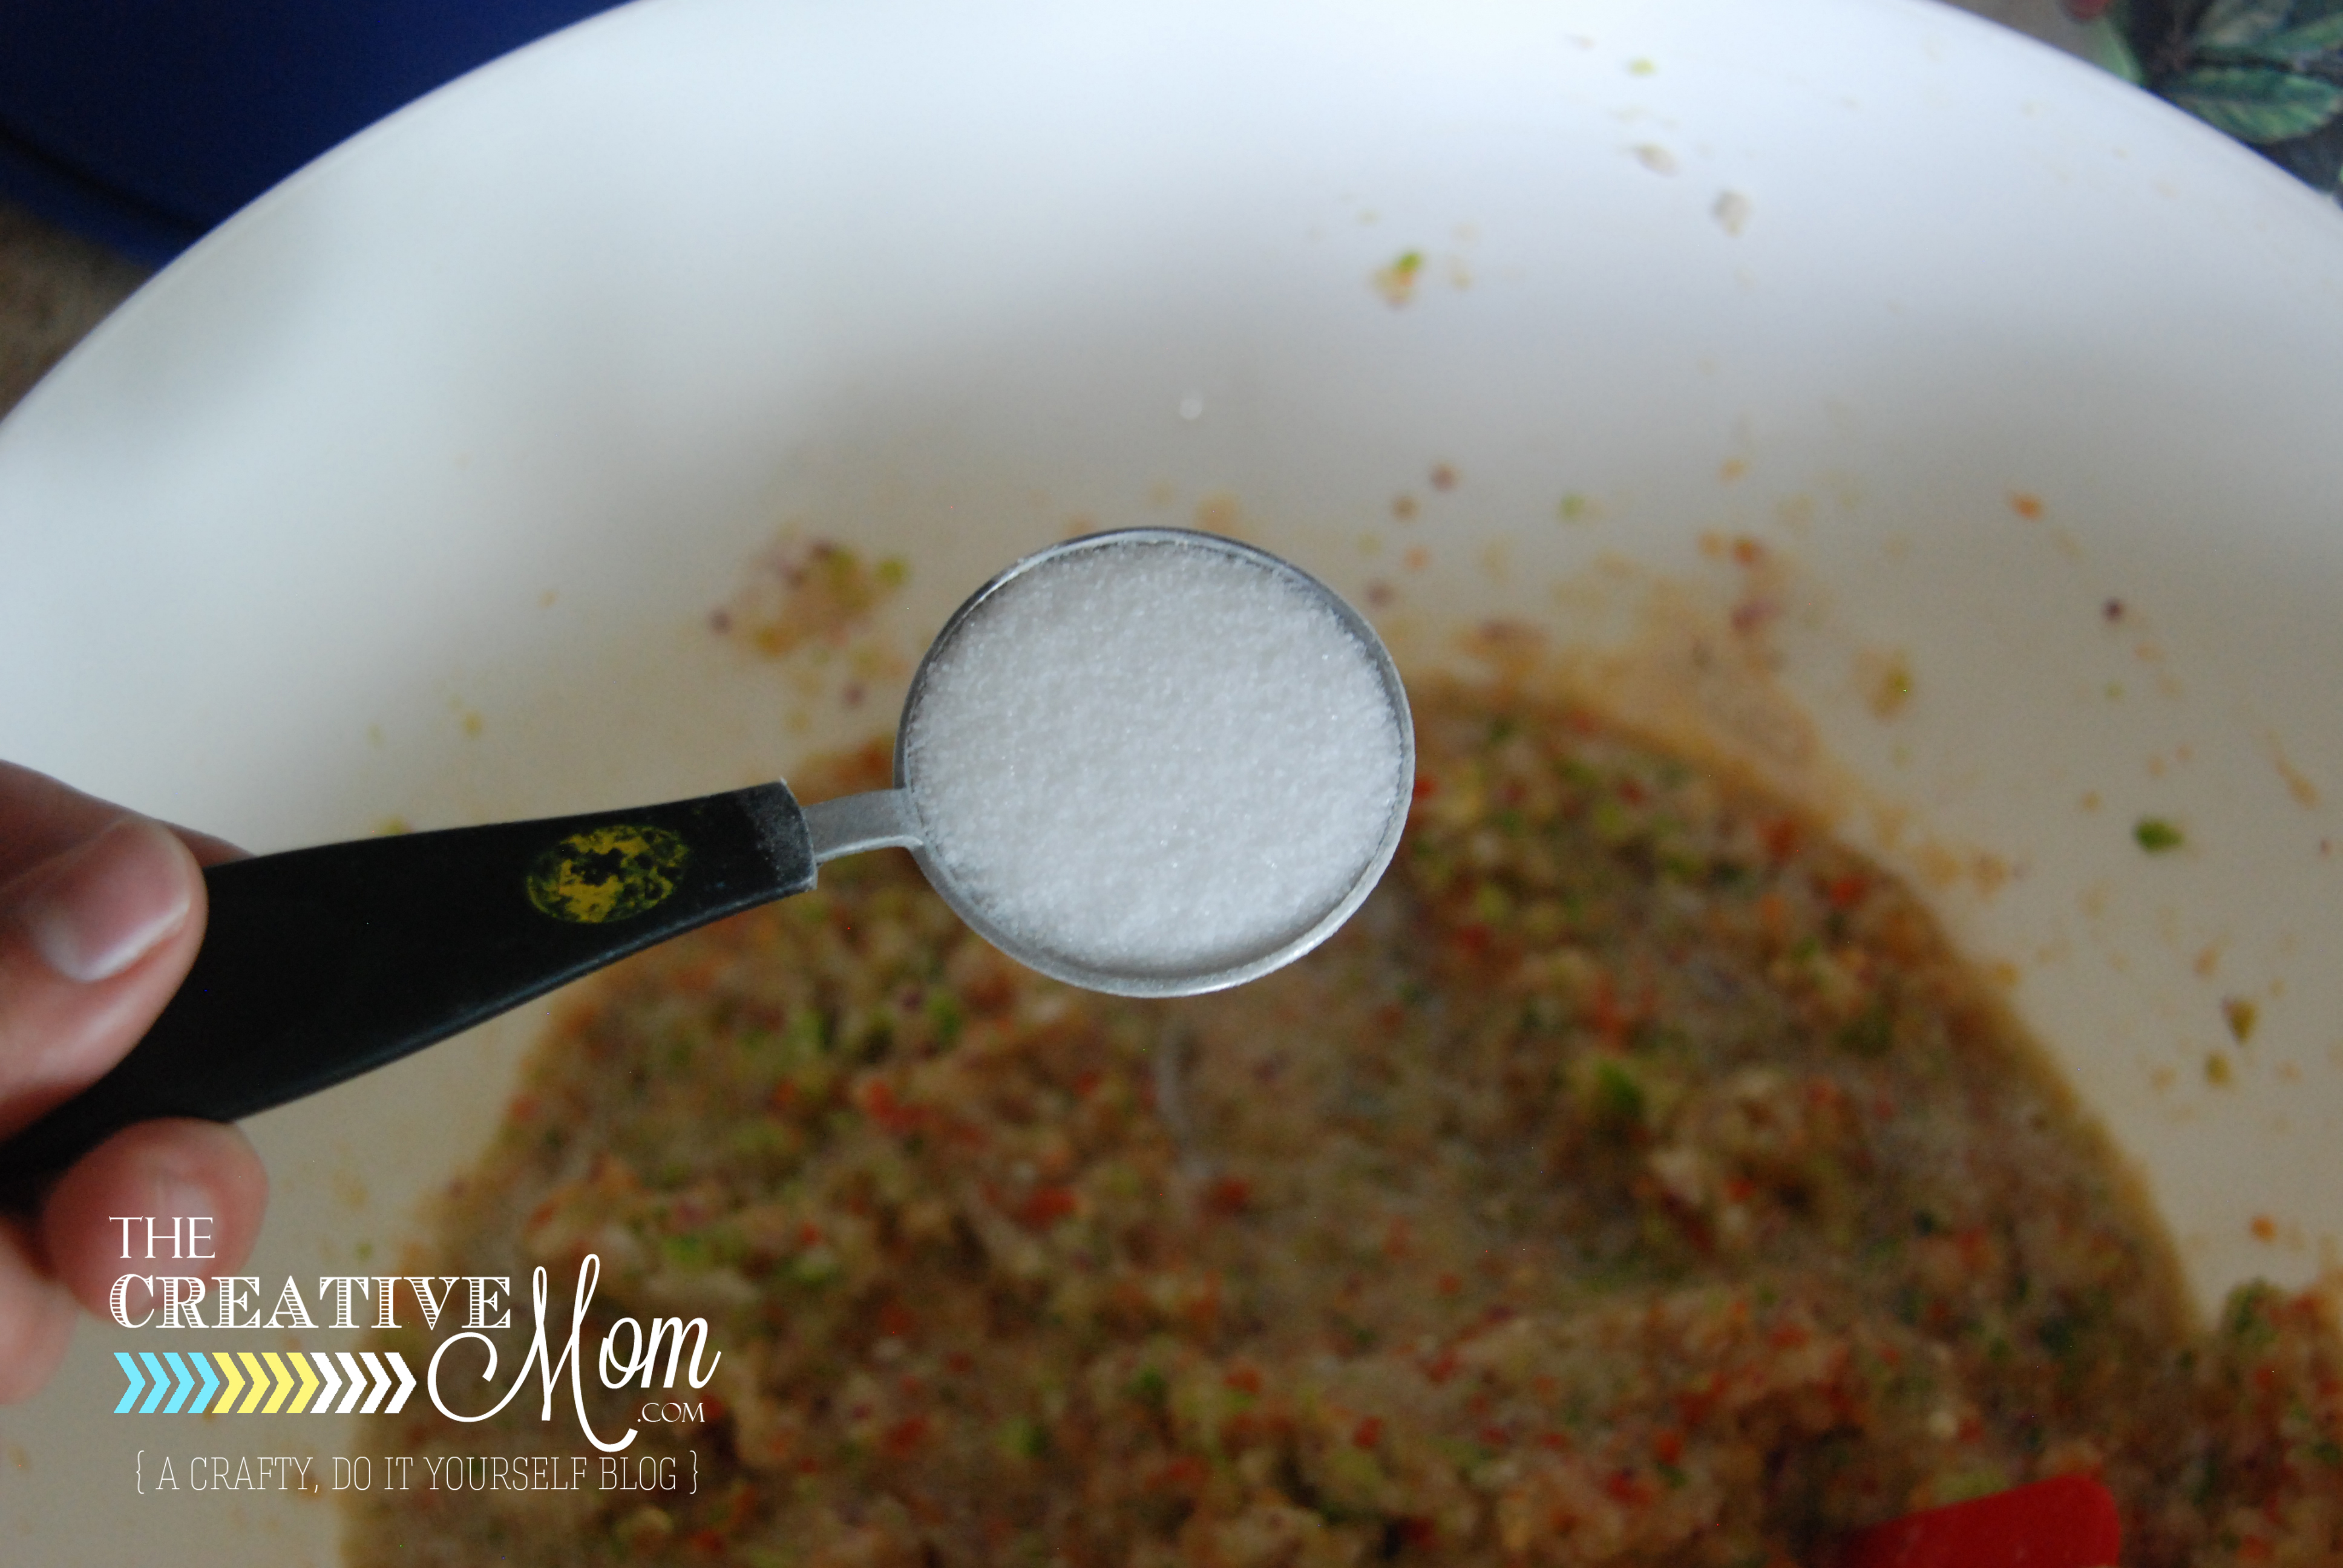 canned salsa recipe